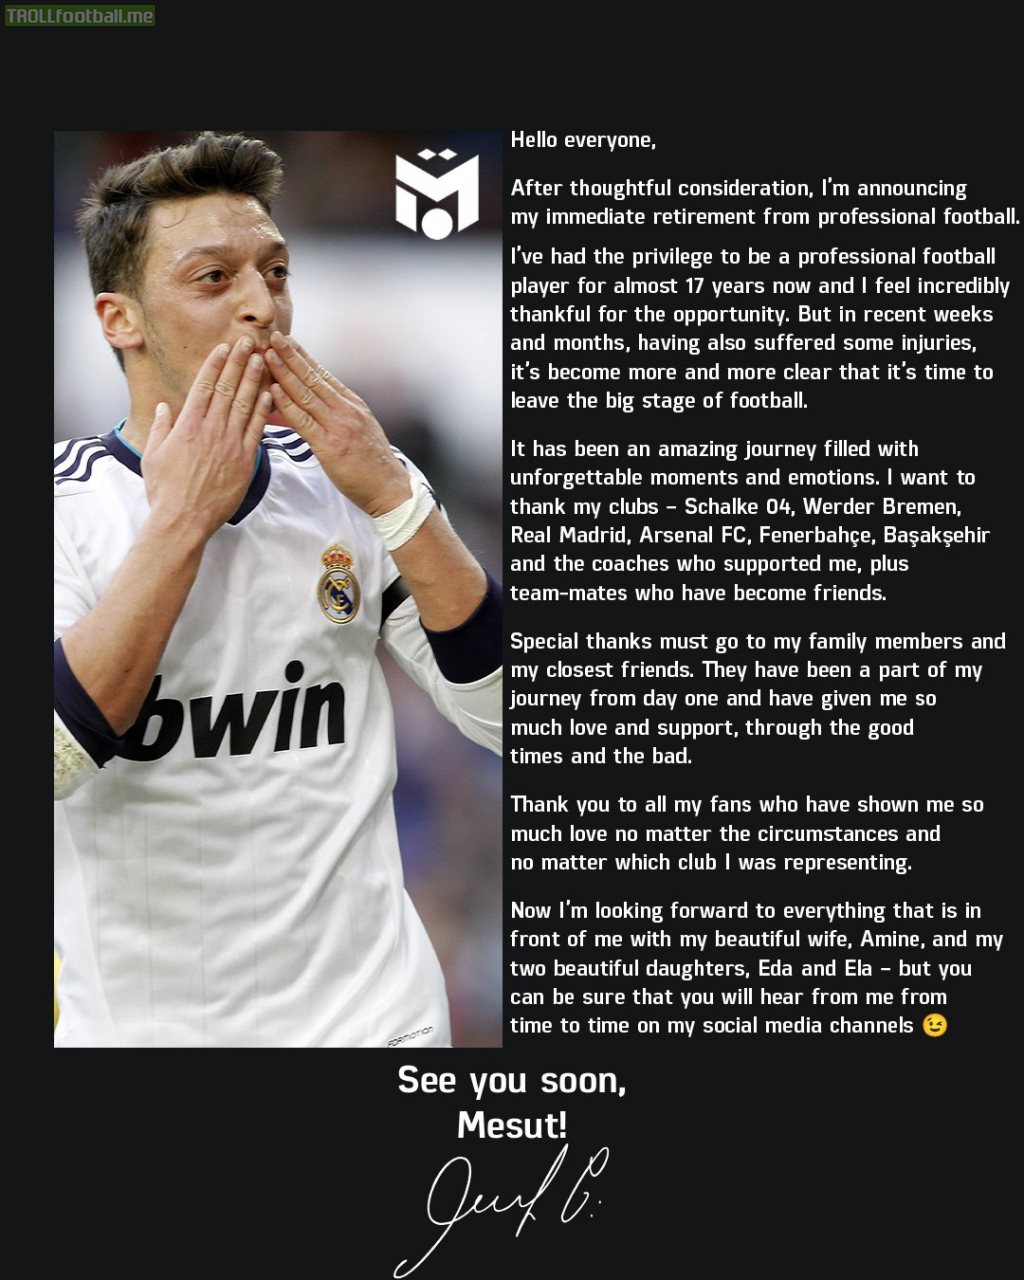 Mesut Ozil's final message before his retirement